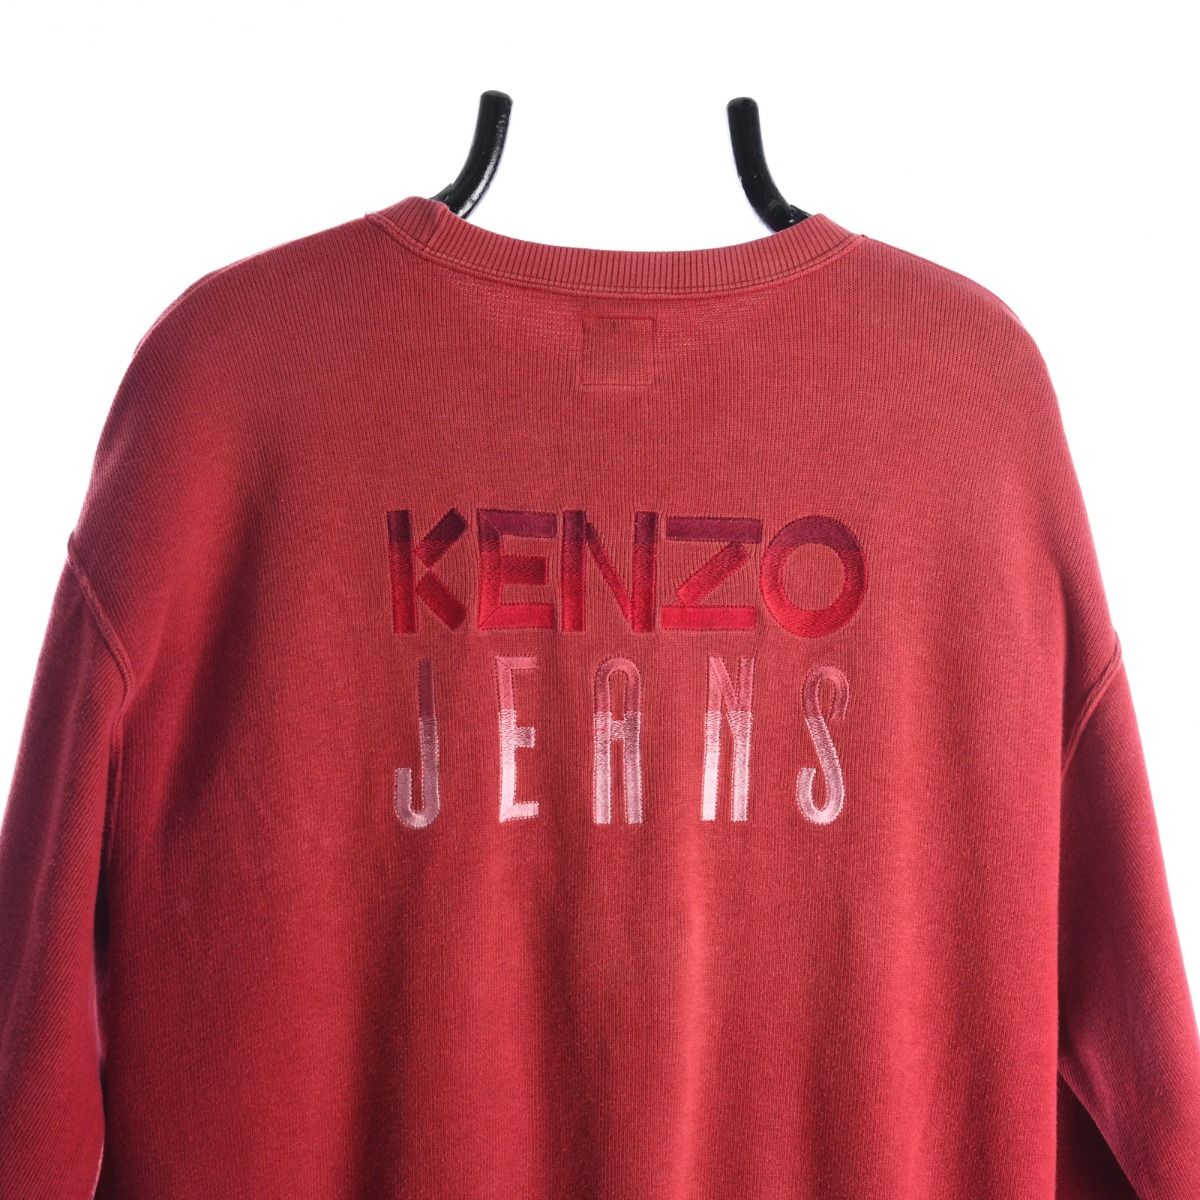 Kenzo Jeans Sweatshirt